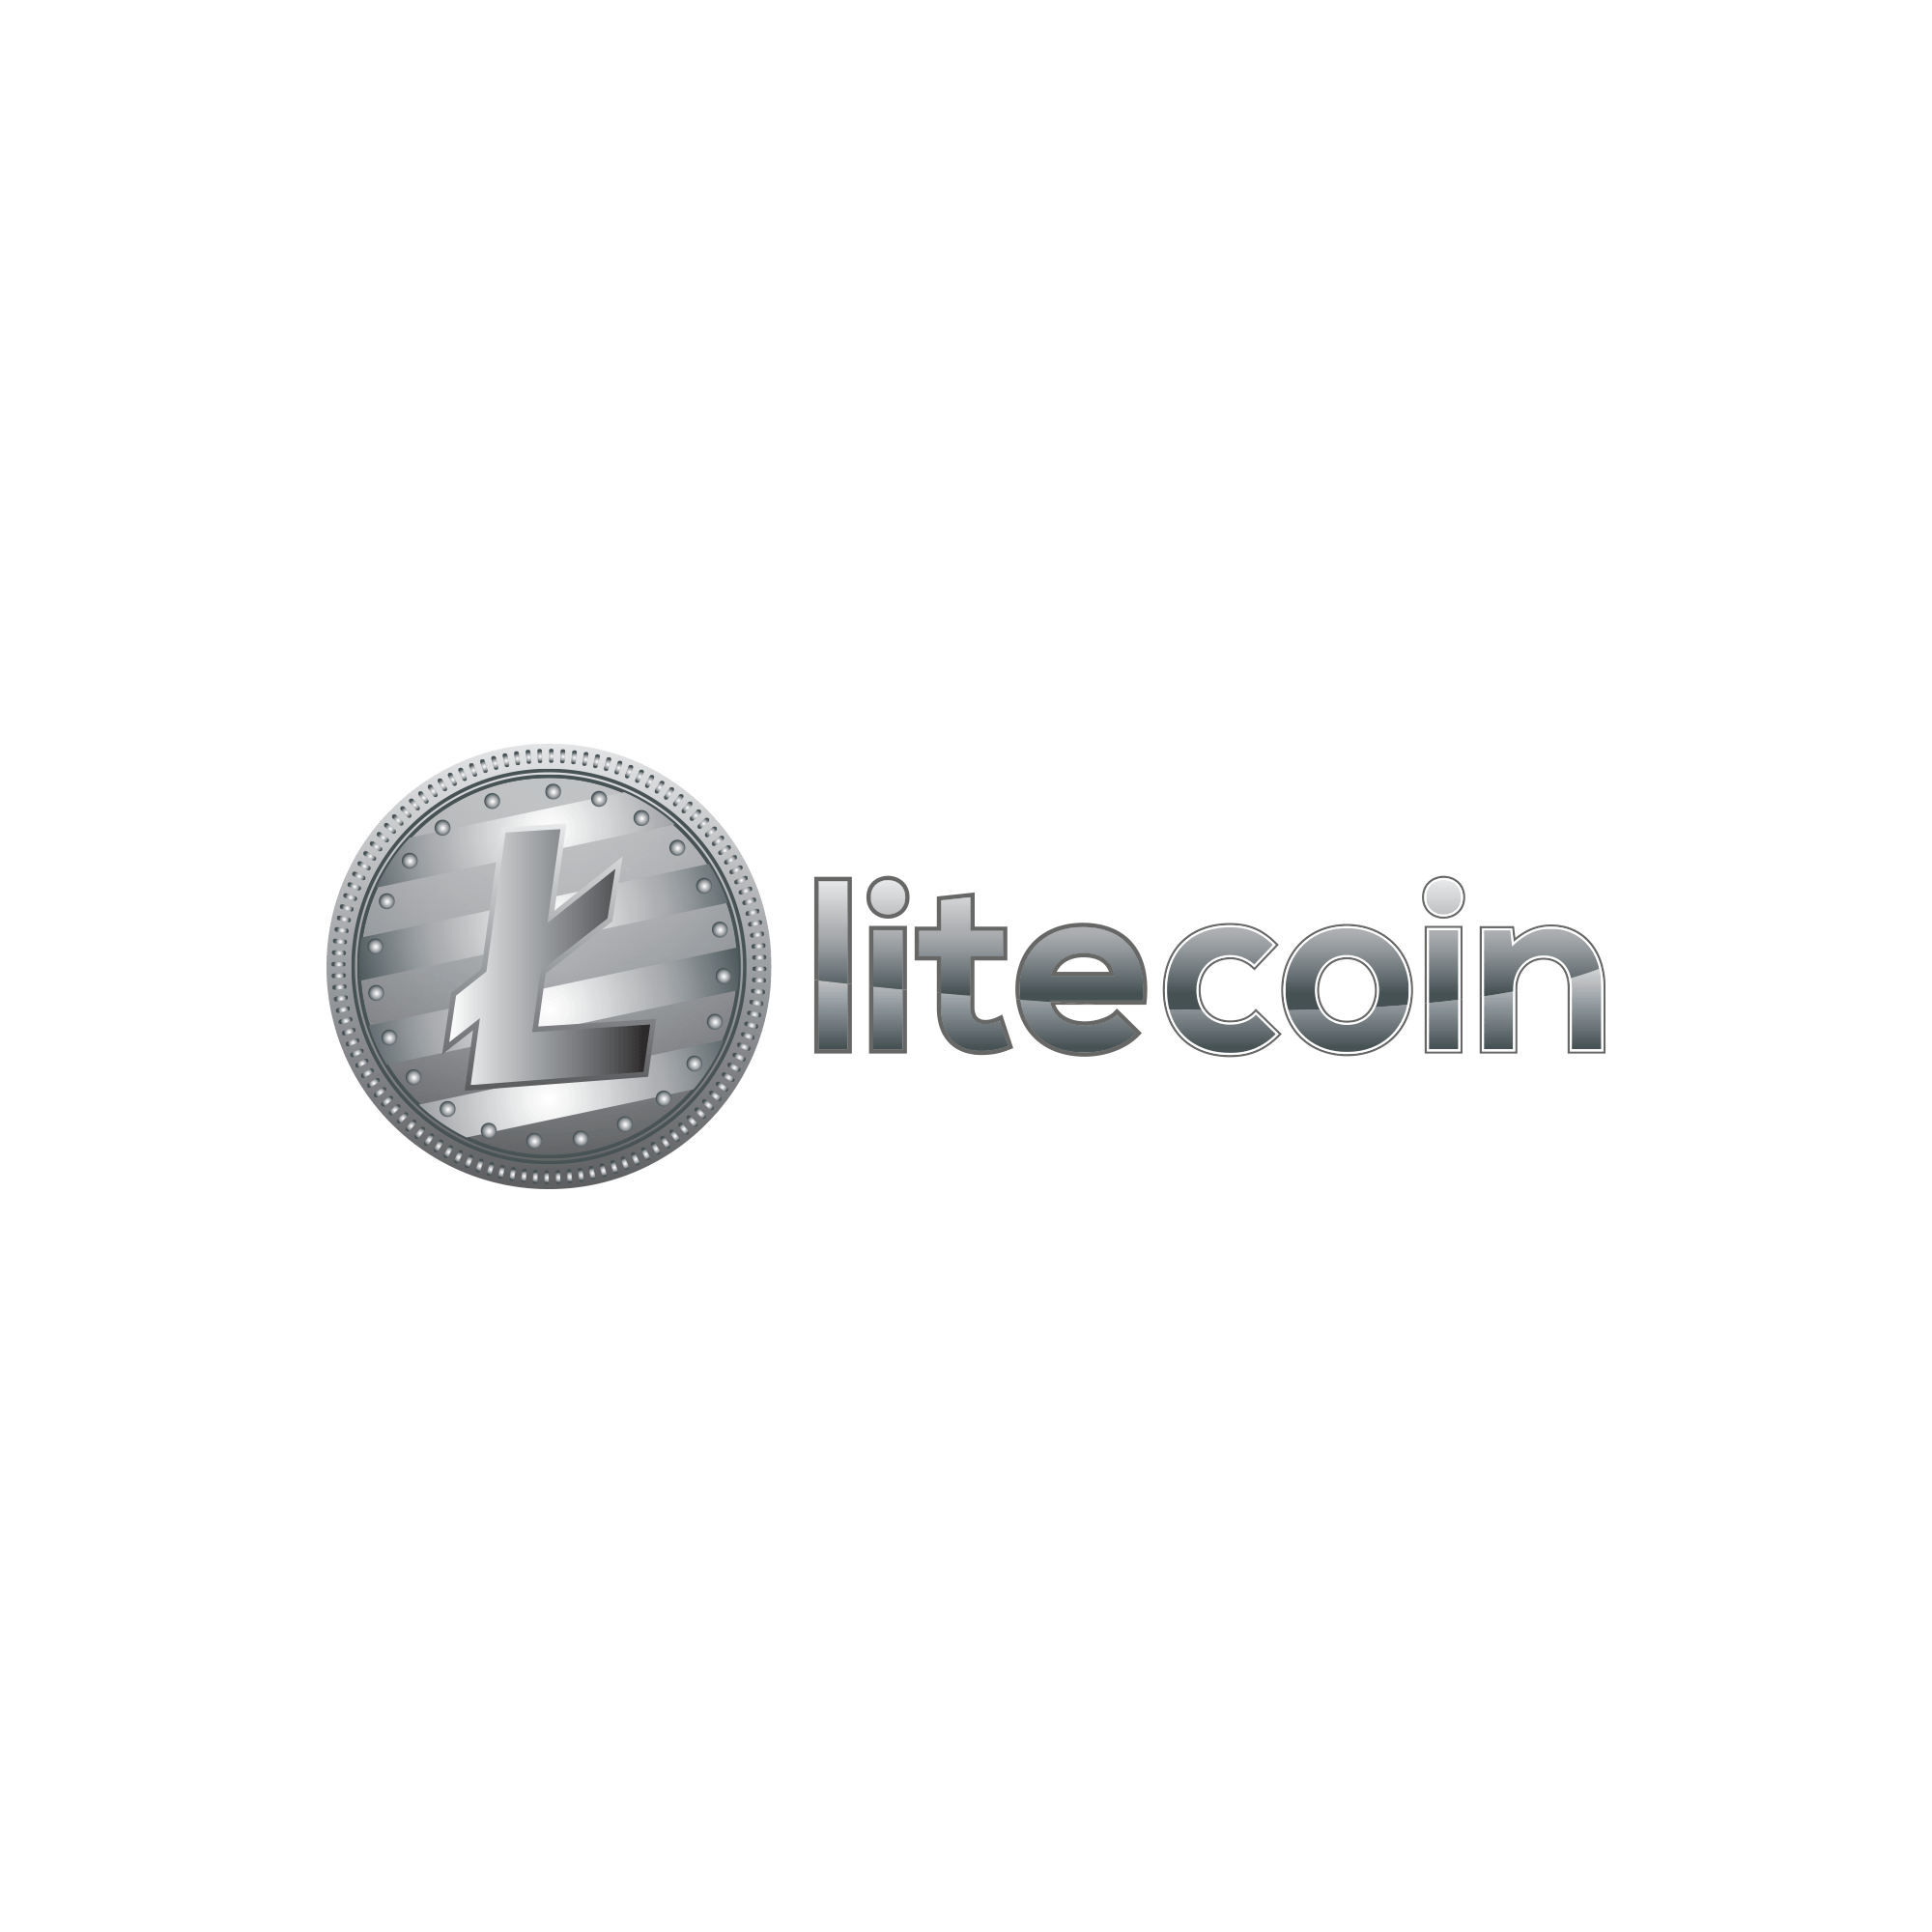 Litecoin Logo - Litecoin logo I had mocked up. Feel free to use it